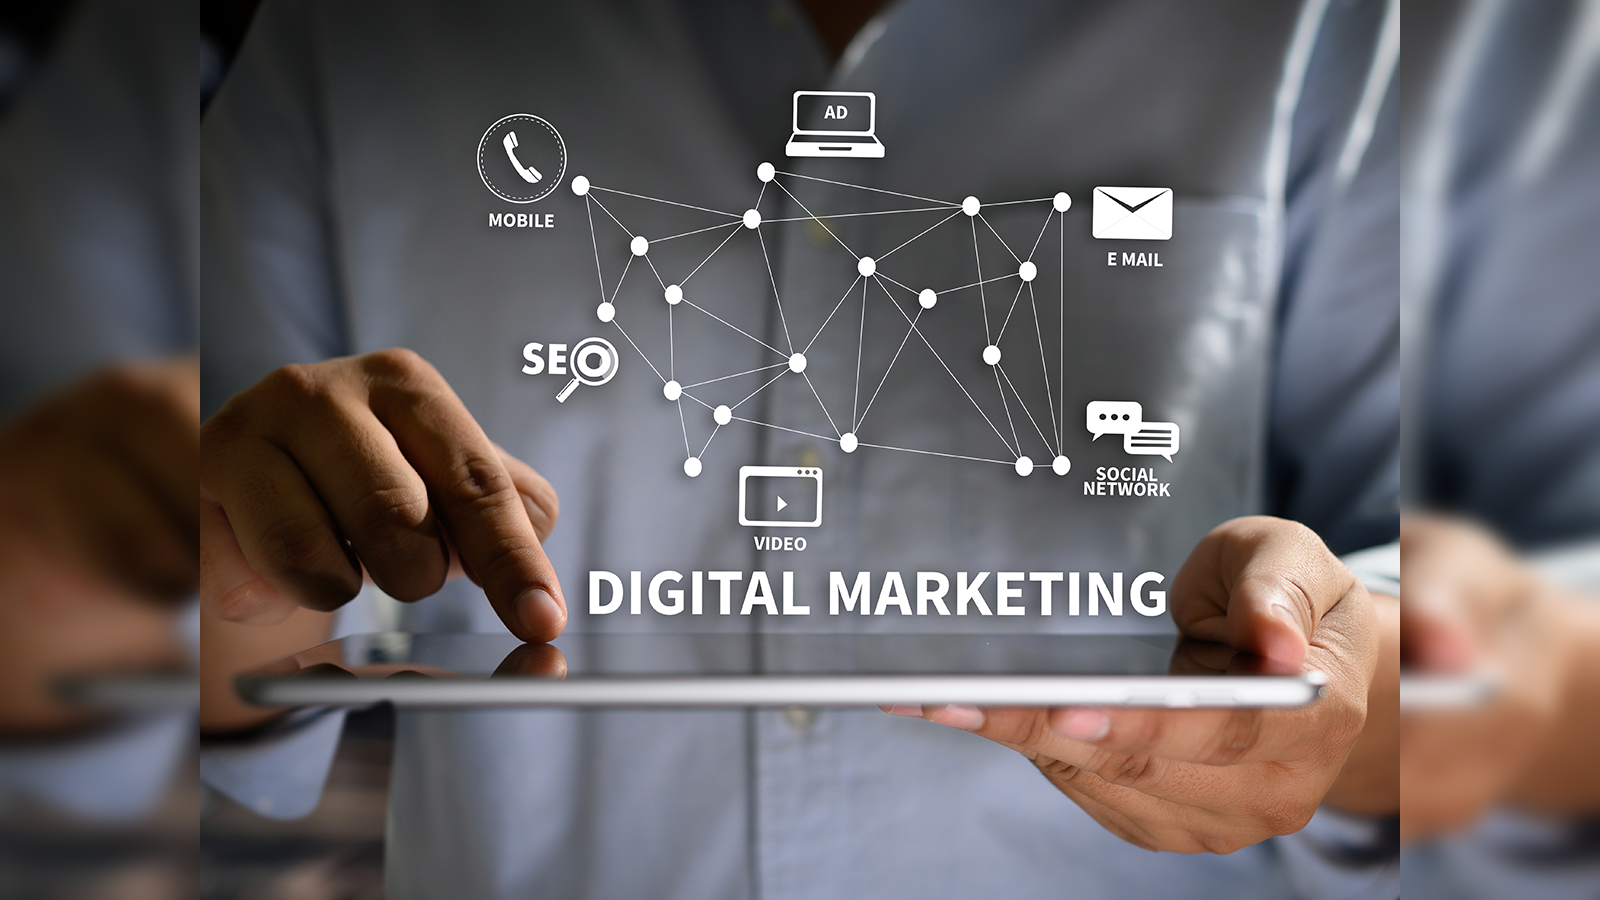 Gastonia Digital Marketing Company to Aligns Product Reach Online